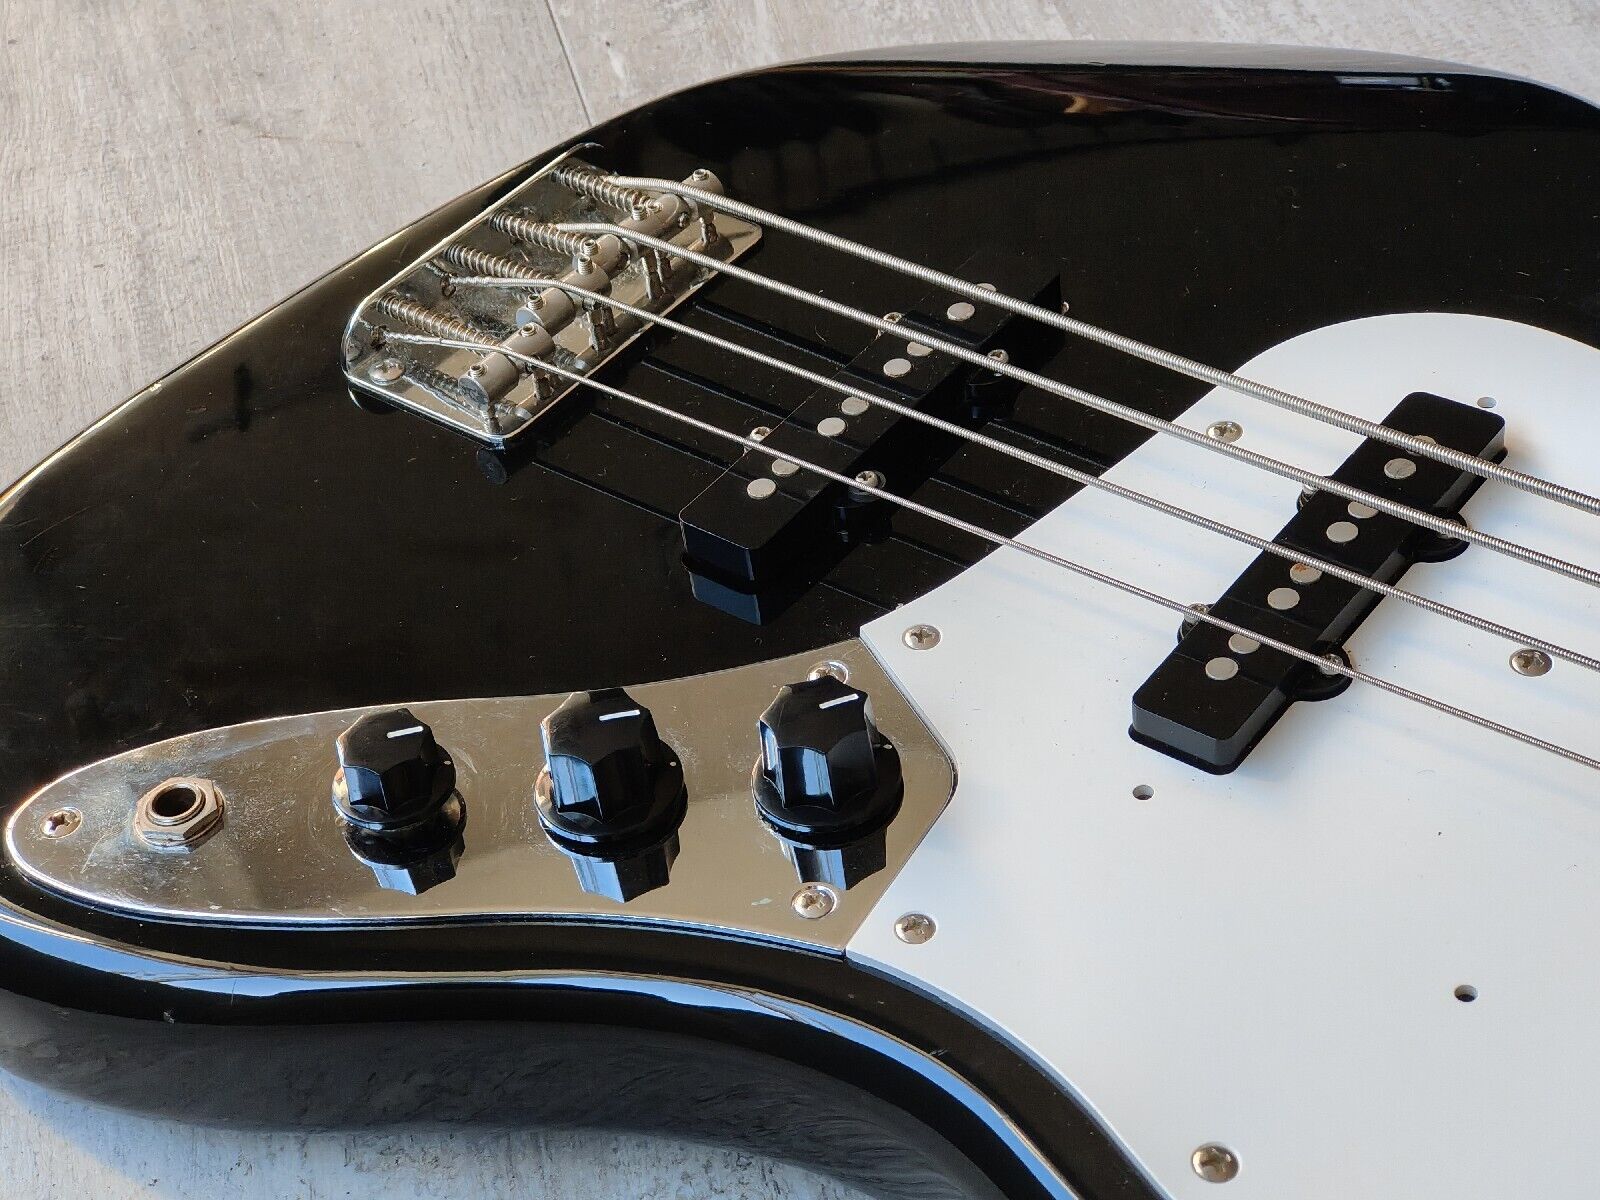 1991 Fender Japan Jazz Bass Standard (Black)